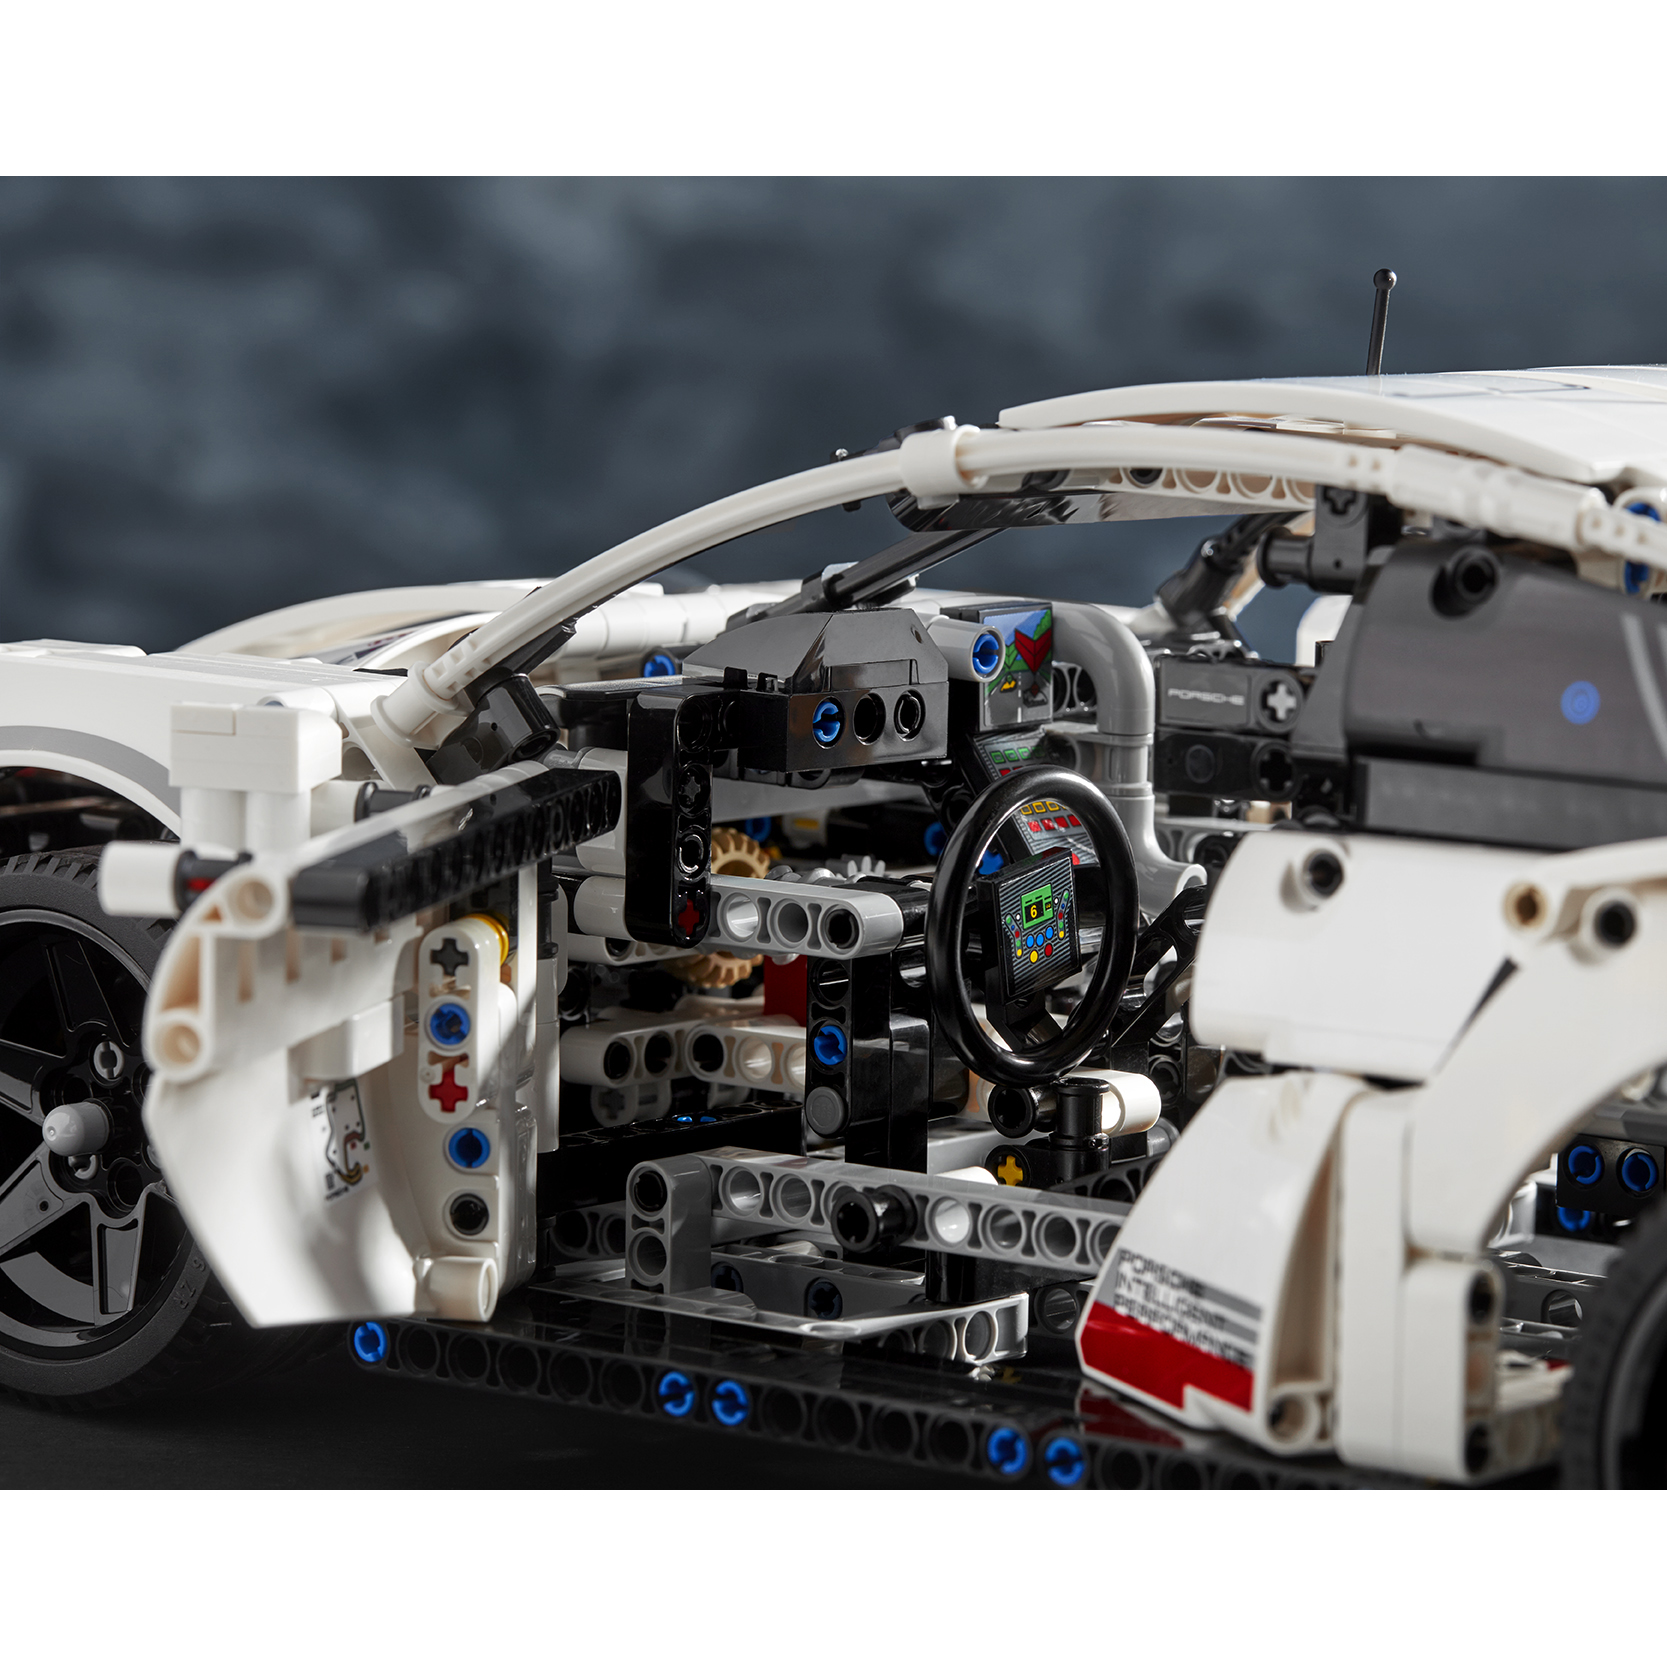 Конструктор LEGO Technic 42096 Porsche 911 RSR